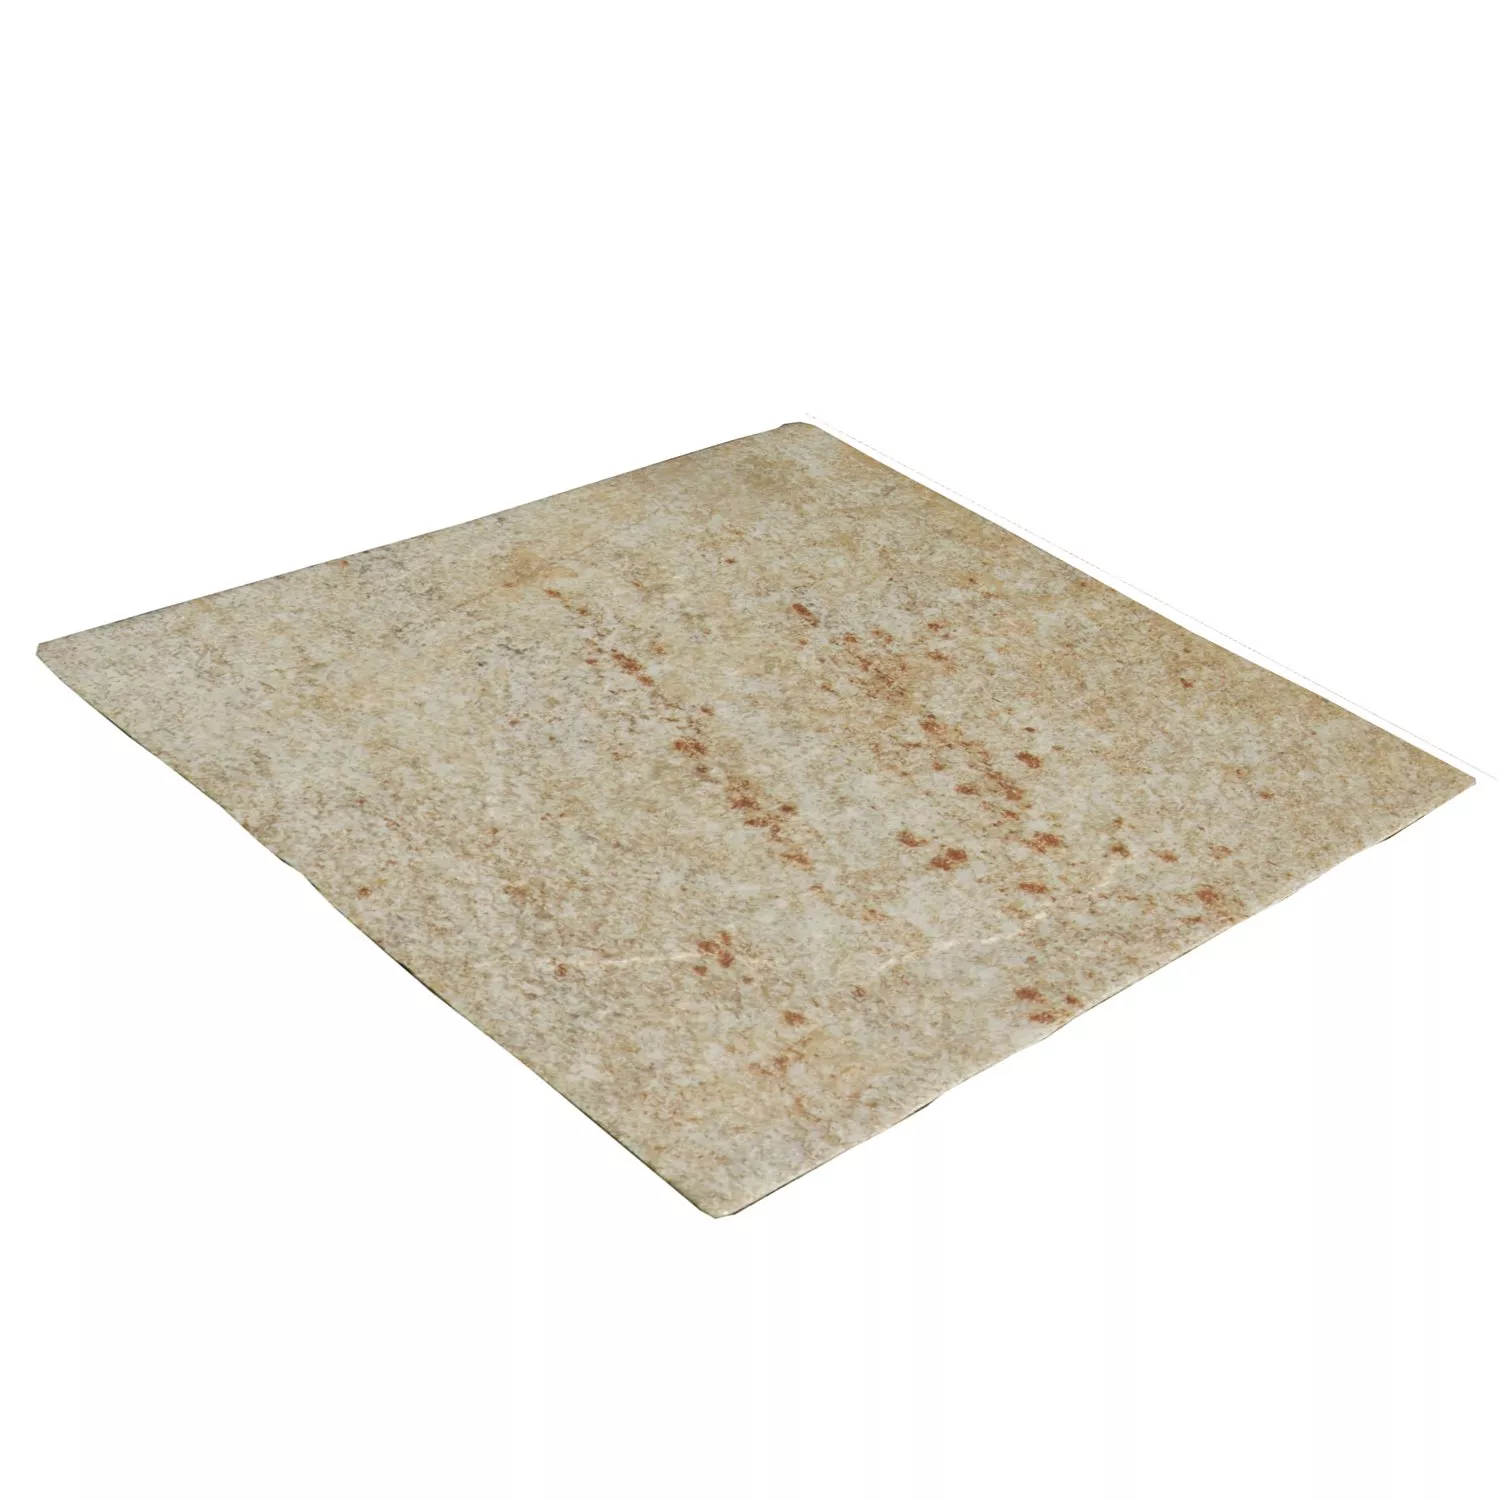 Sample Floor Tiles Acapulco Natural Stone Optic Beige 21,6x21,6cm